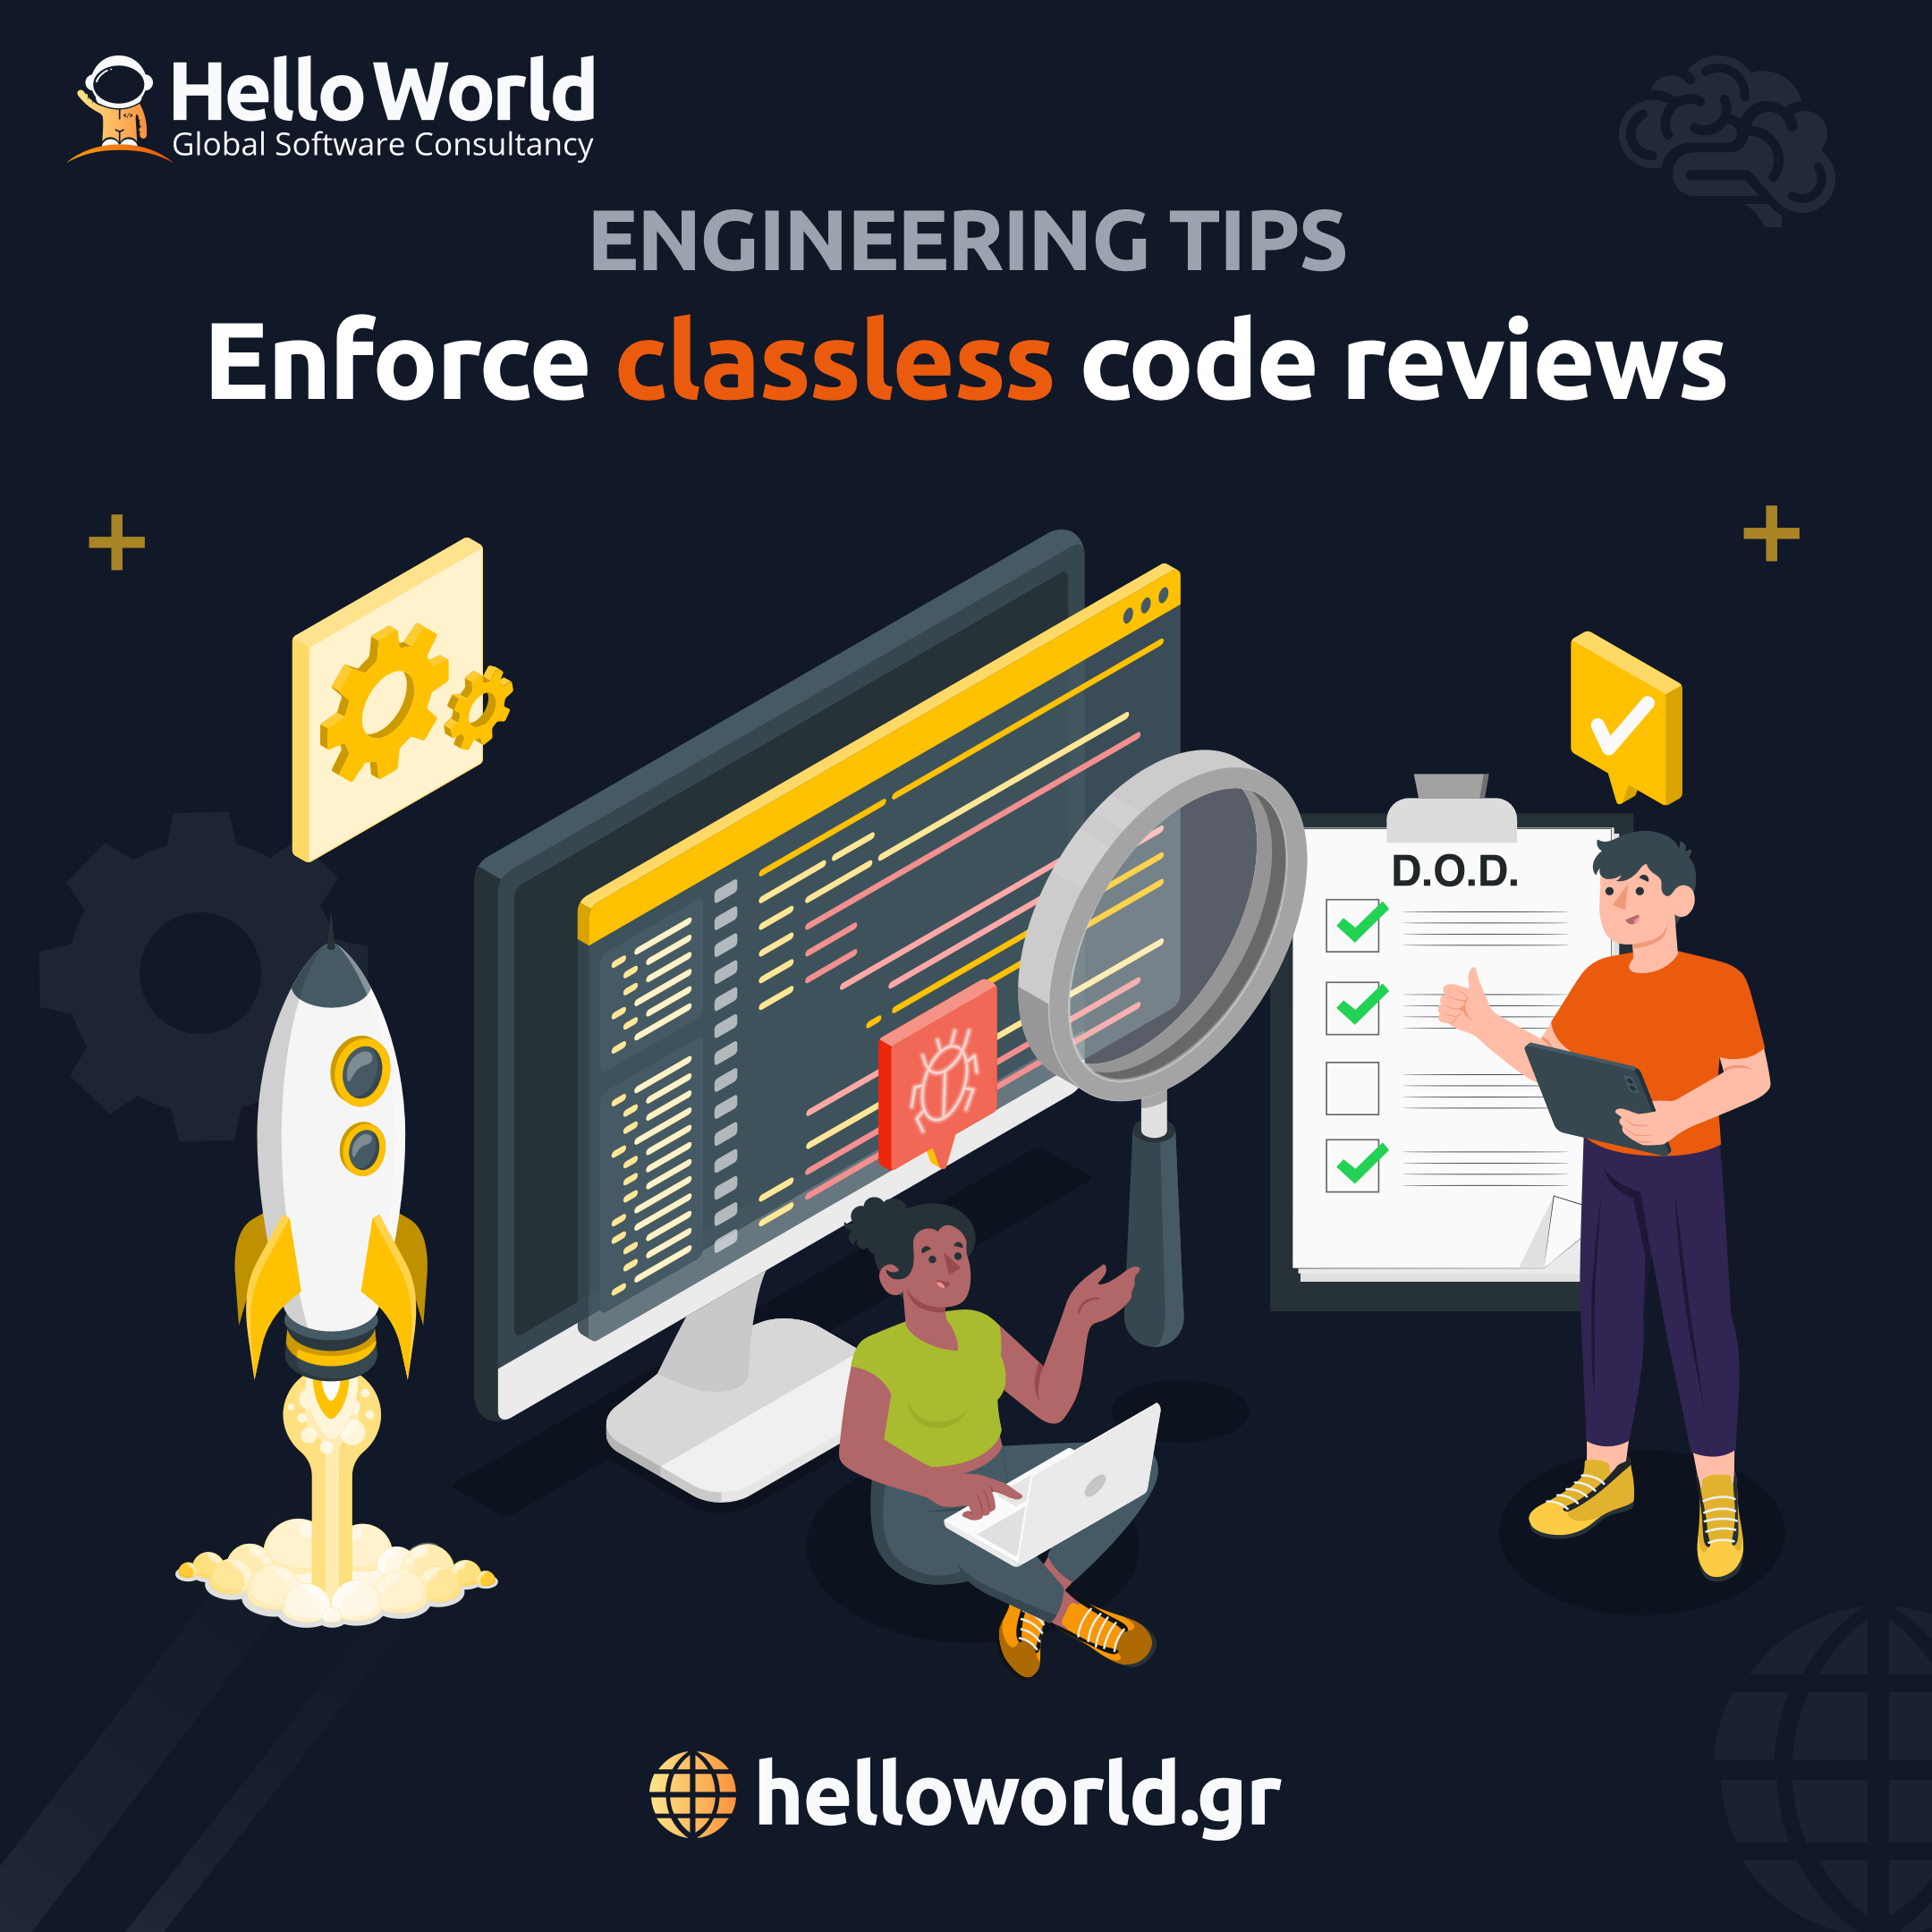 Enforce classless code reviews